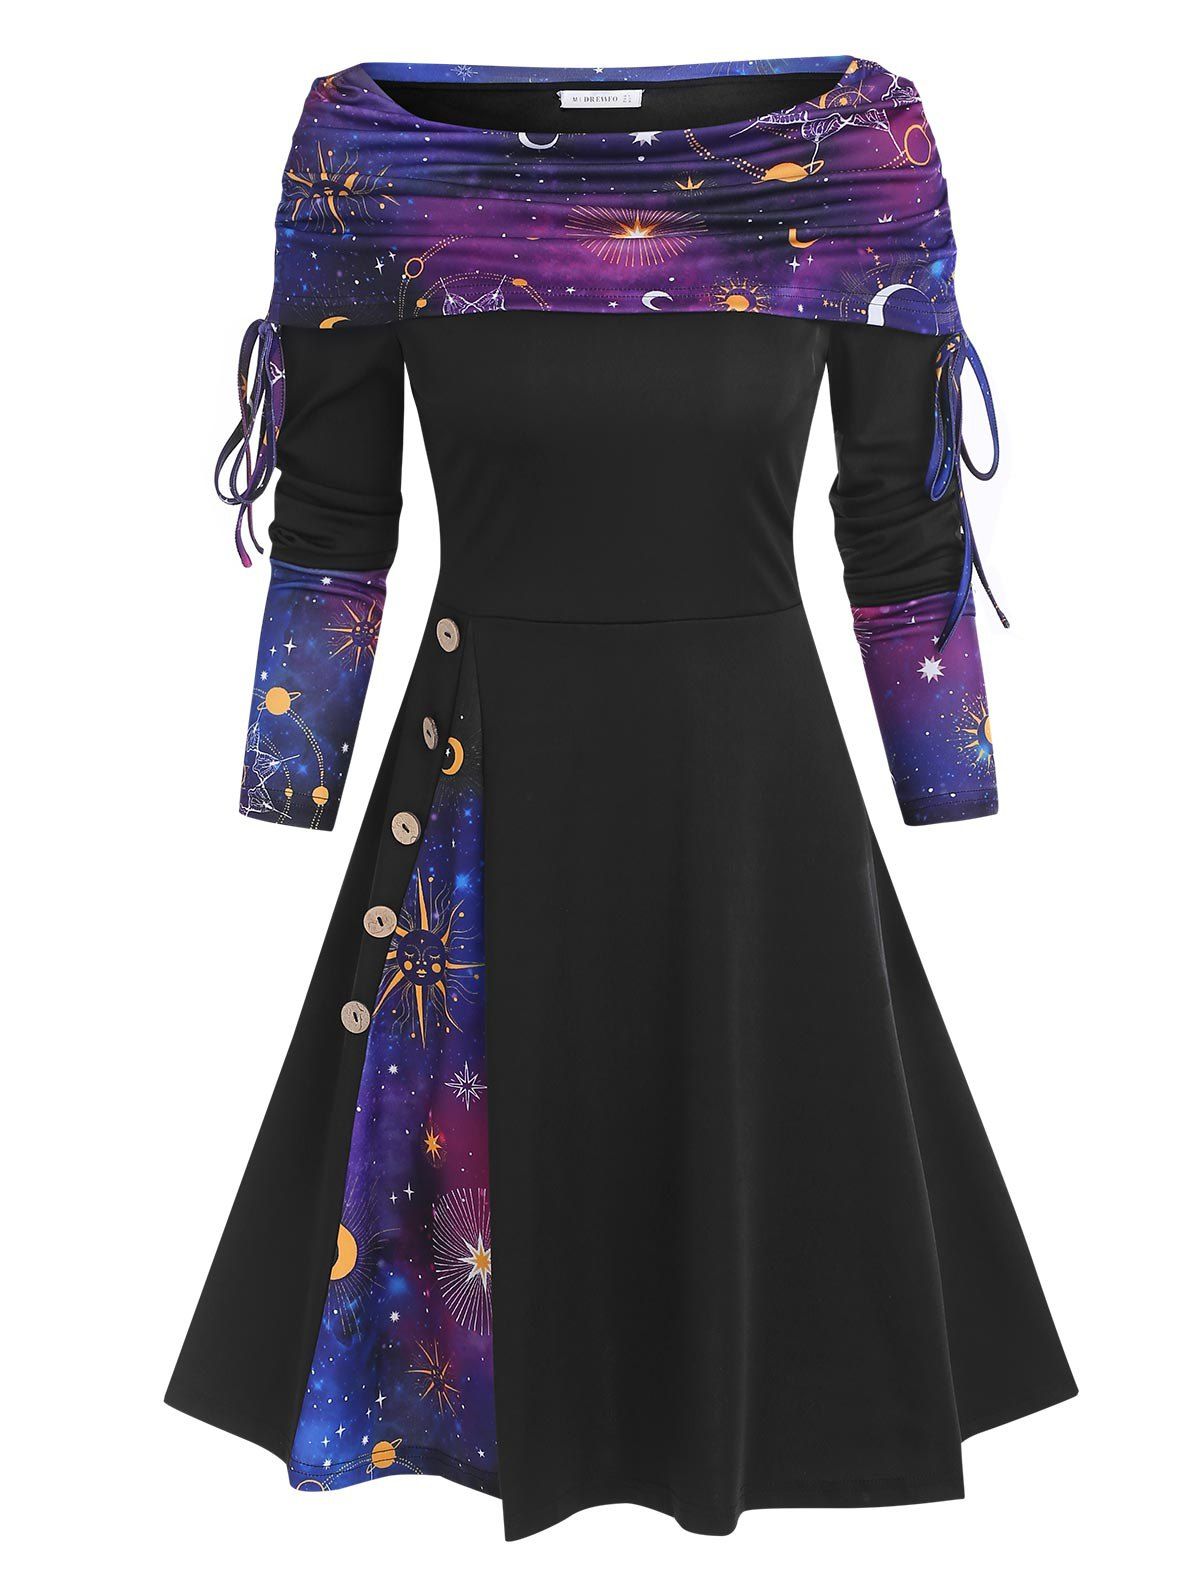 Cinched Off The Shoulder 3D Galaxy Print Dress - CONCORD XL